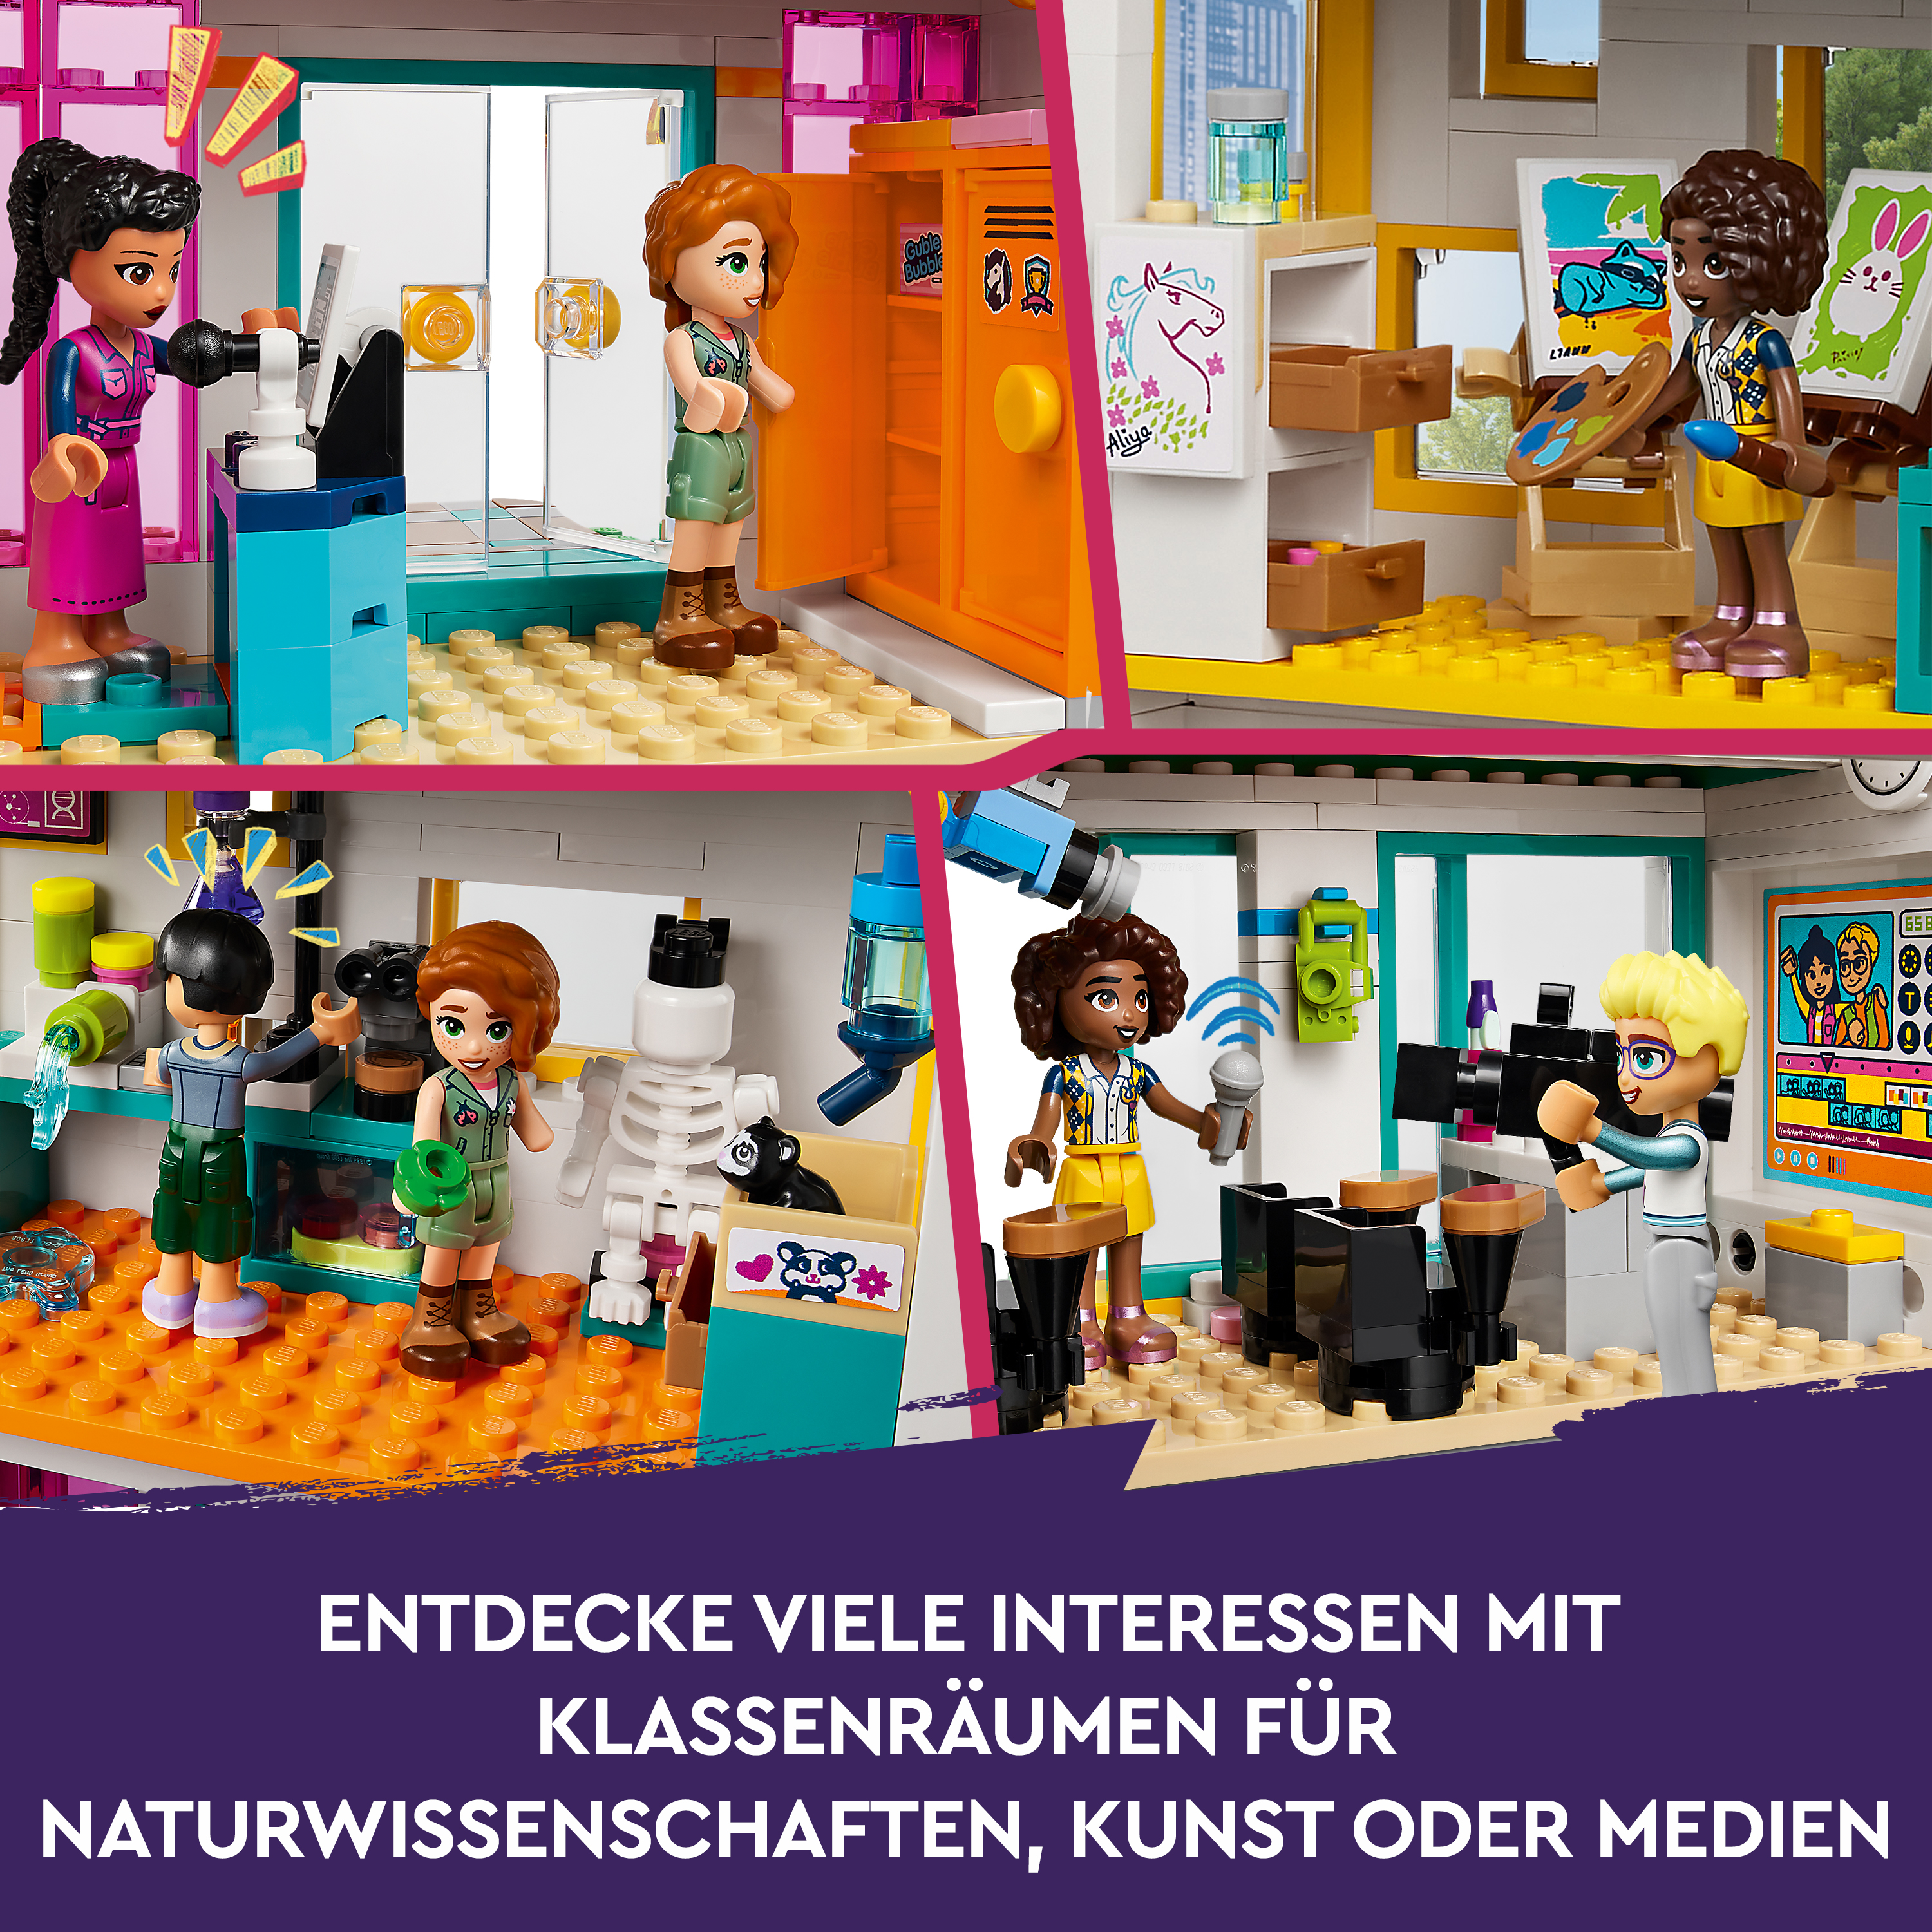 Schule Bausatz, Friends Internationale 41731 LEGO Mehrfarbig